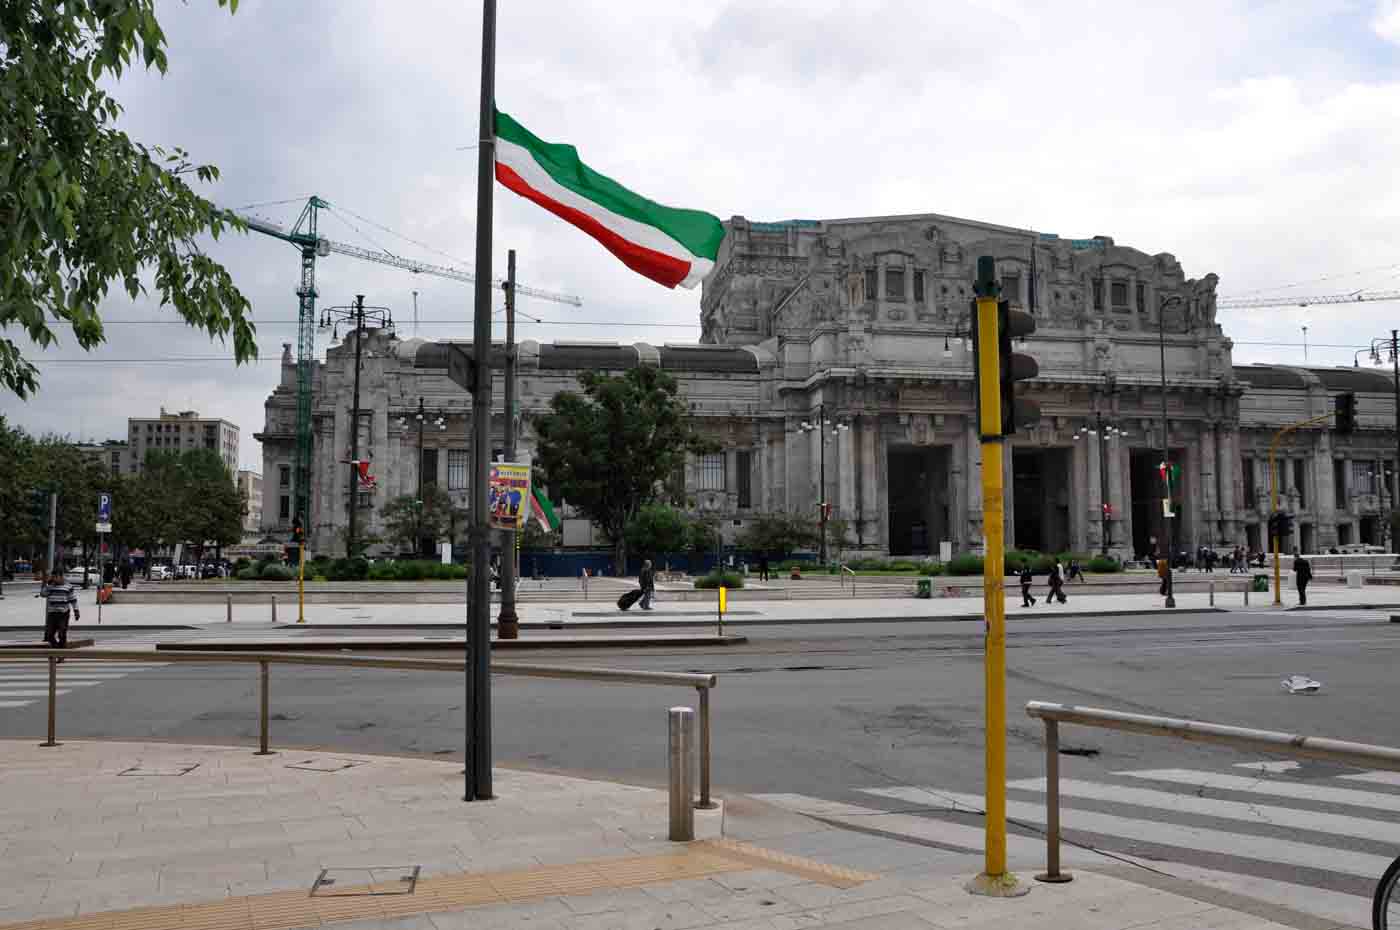 Stazione Centrale – Great Milano Railway Station